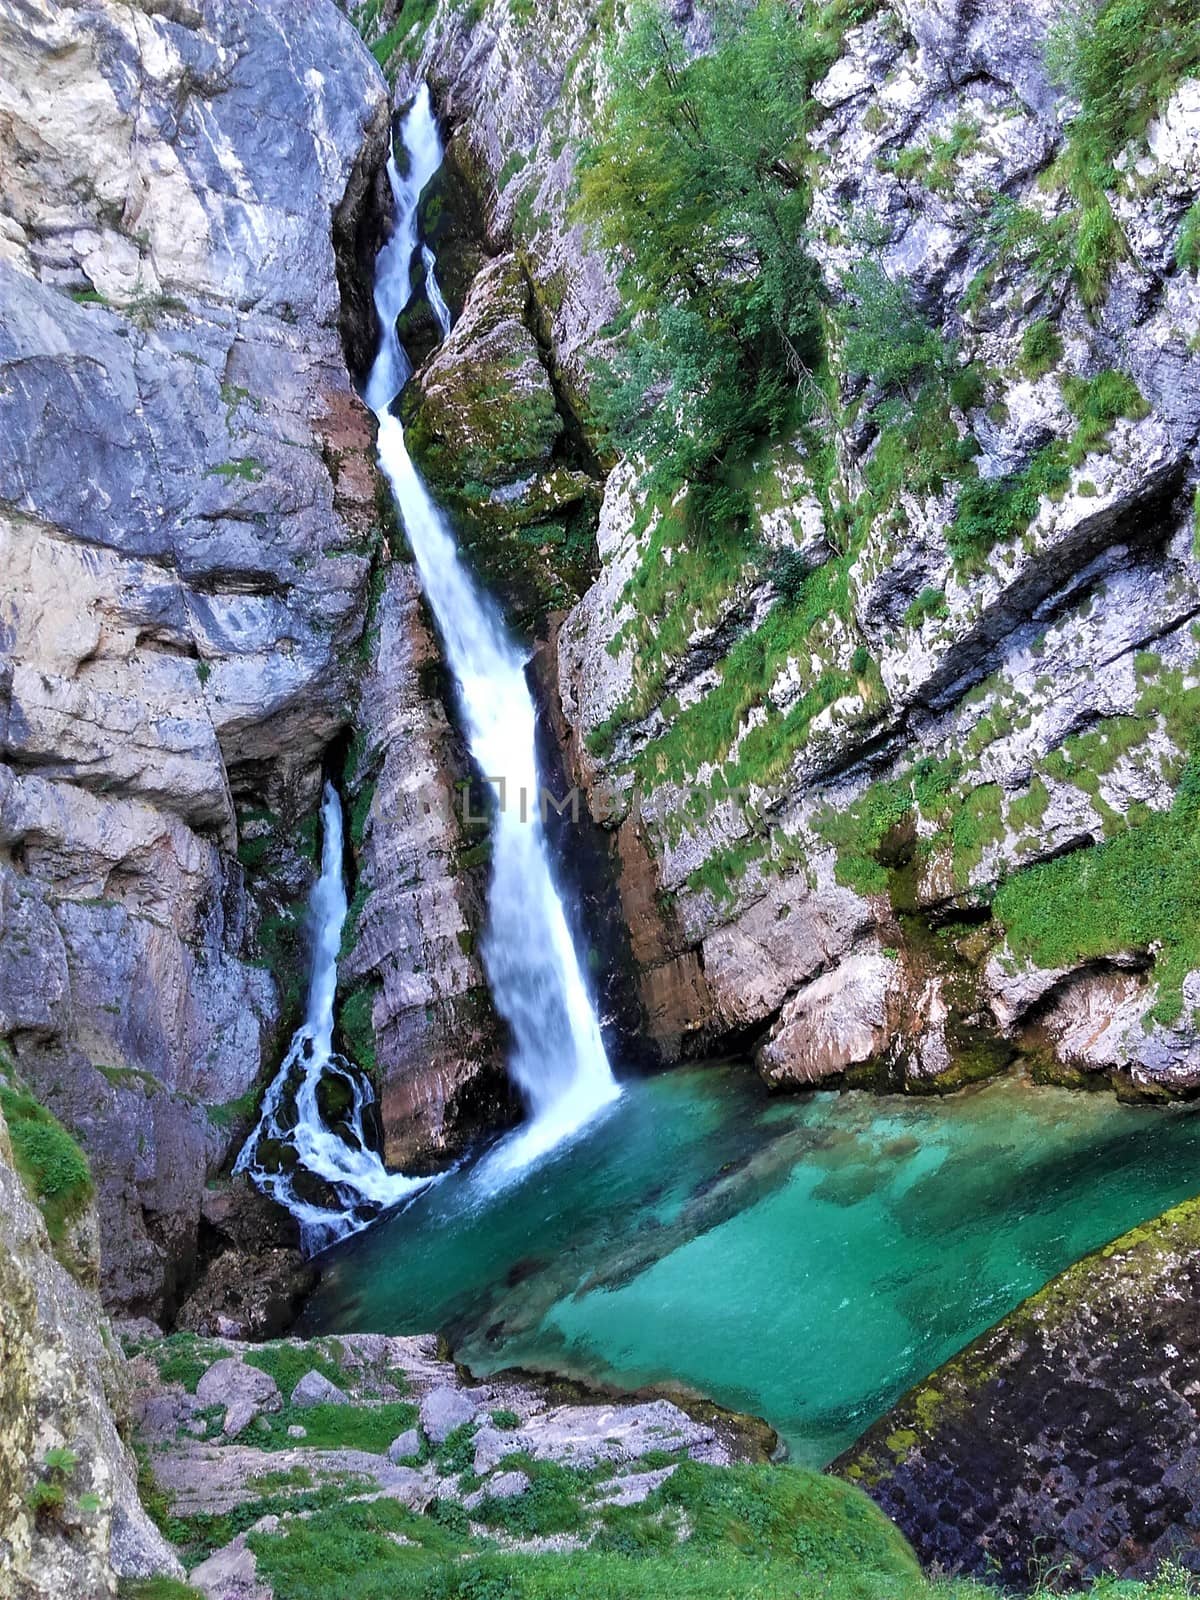 Turquoise Savica fall streaming down the rocks